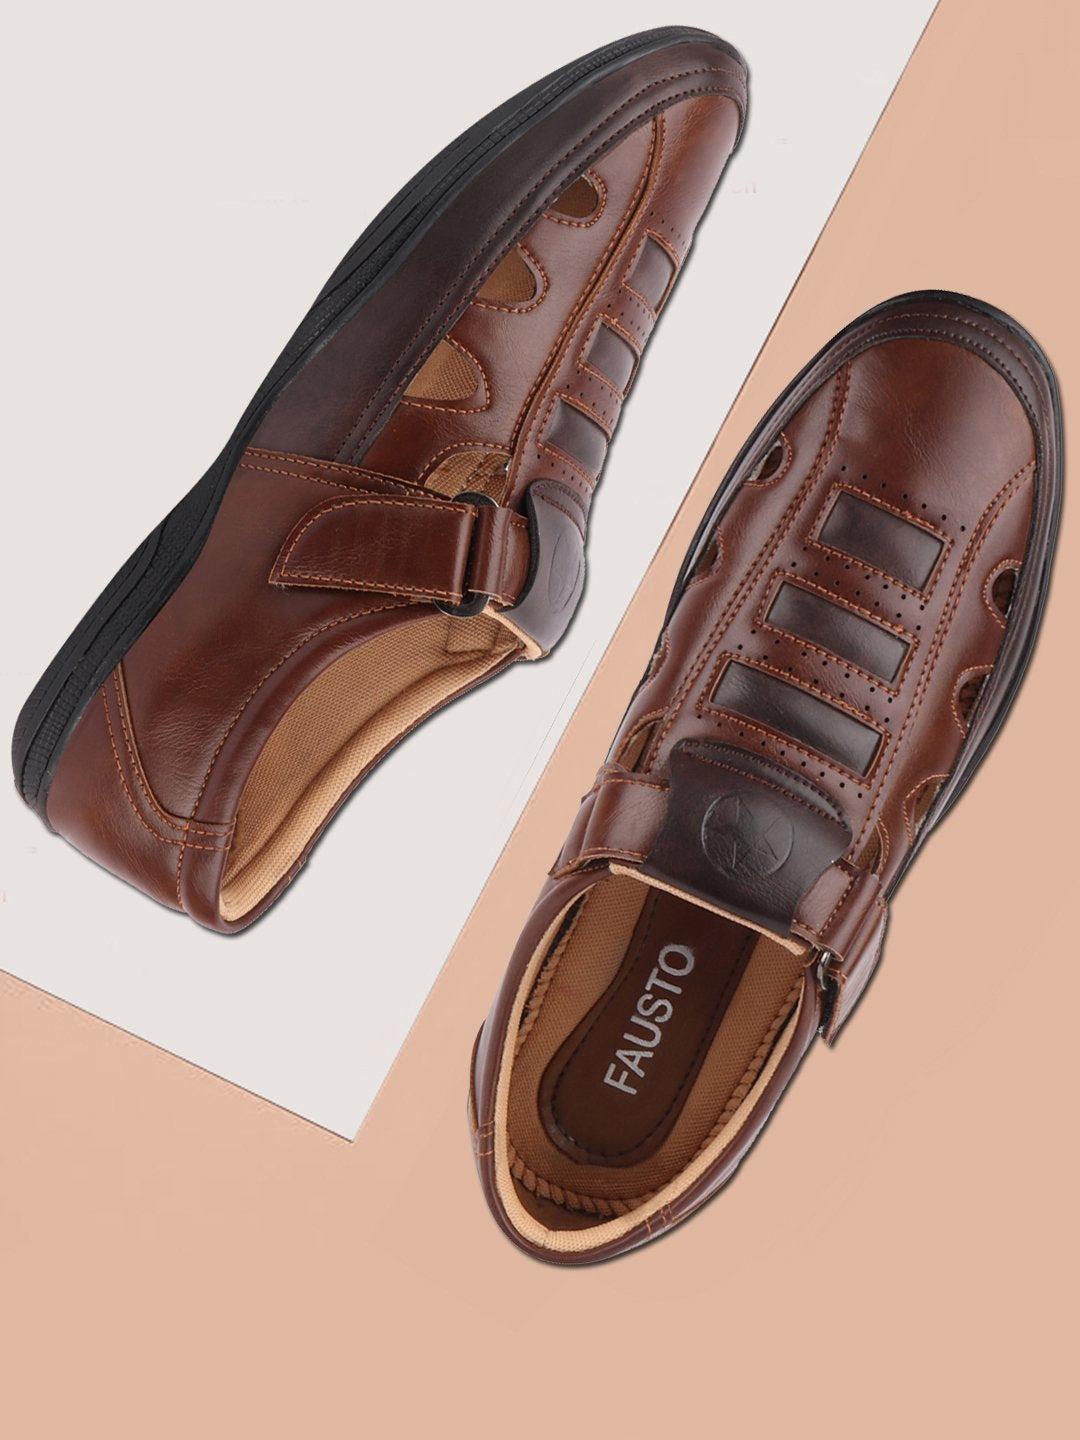 fausto-men-brown-shoe-style-sandals